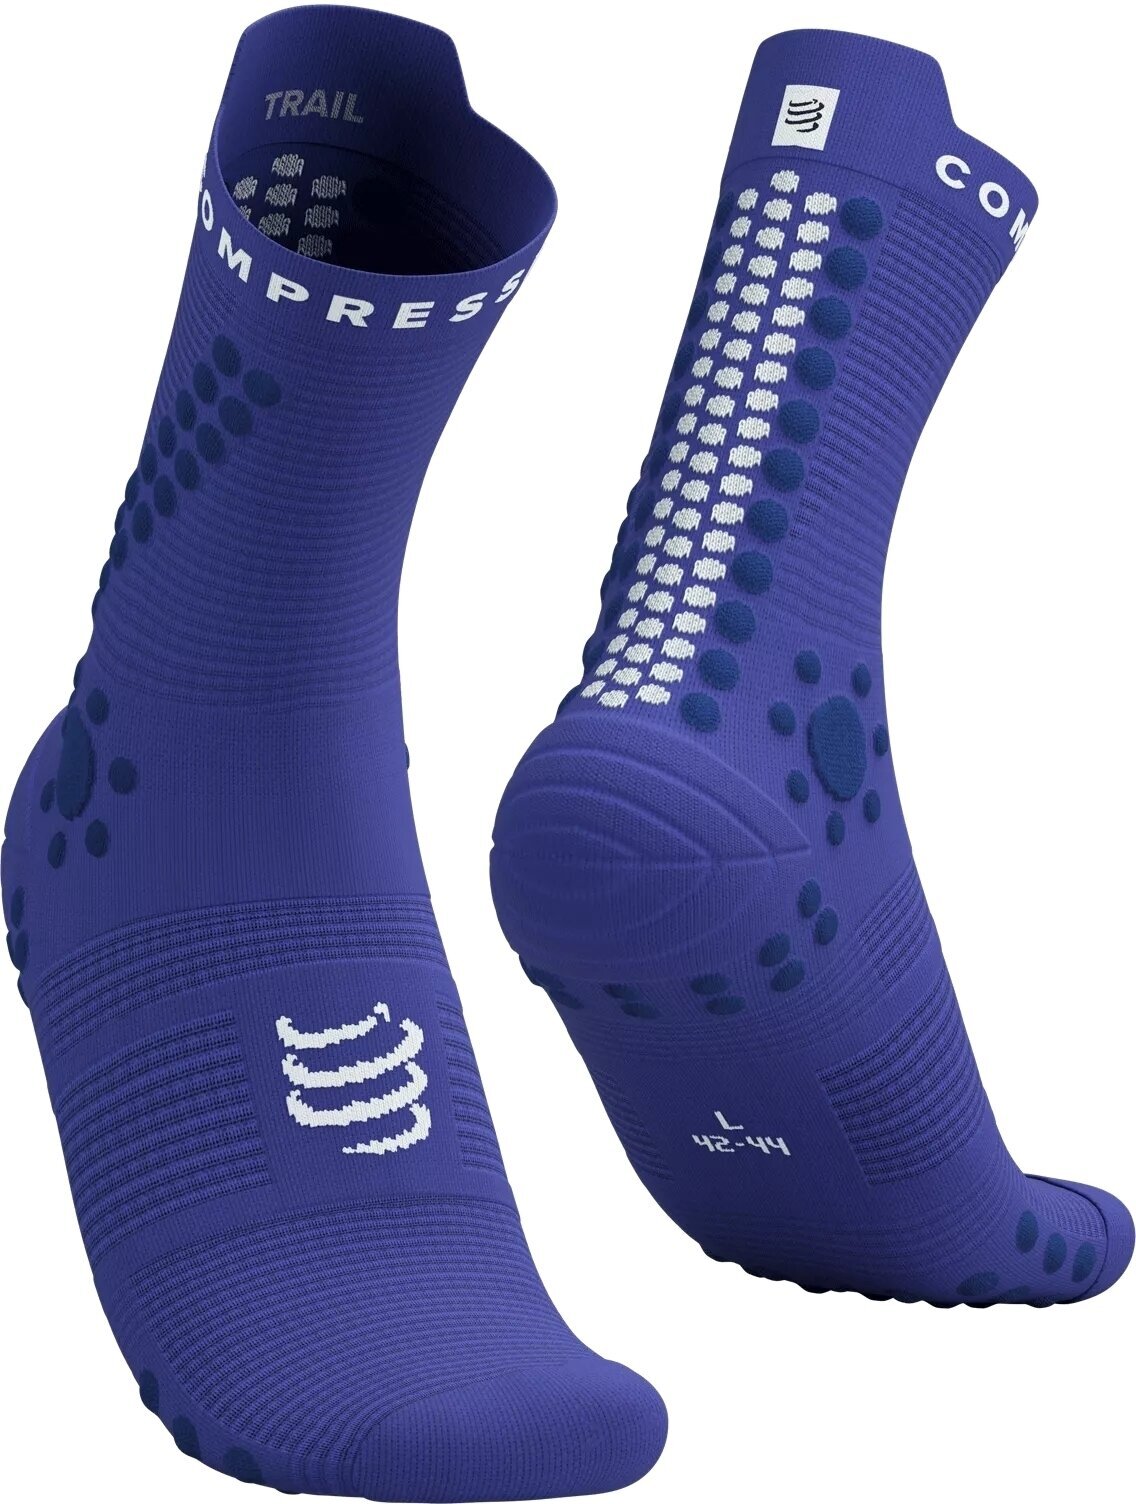 Running socks
 Compressport Pro Racing Socks V4.0 Trail Dazzling Blue/Dress Blues/White T4 Running socks